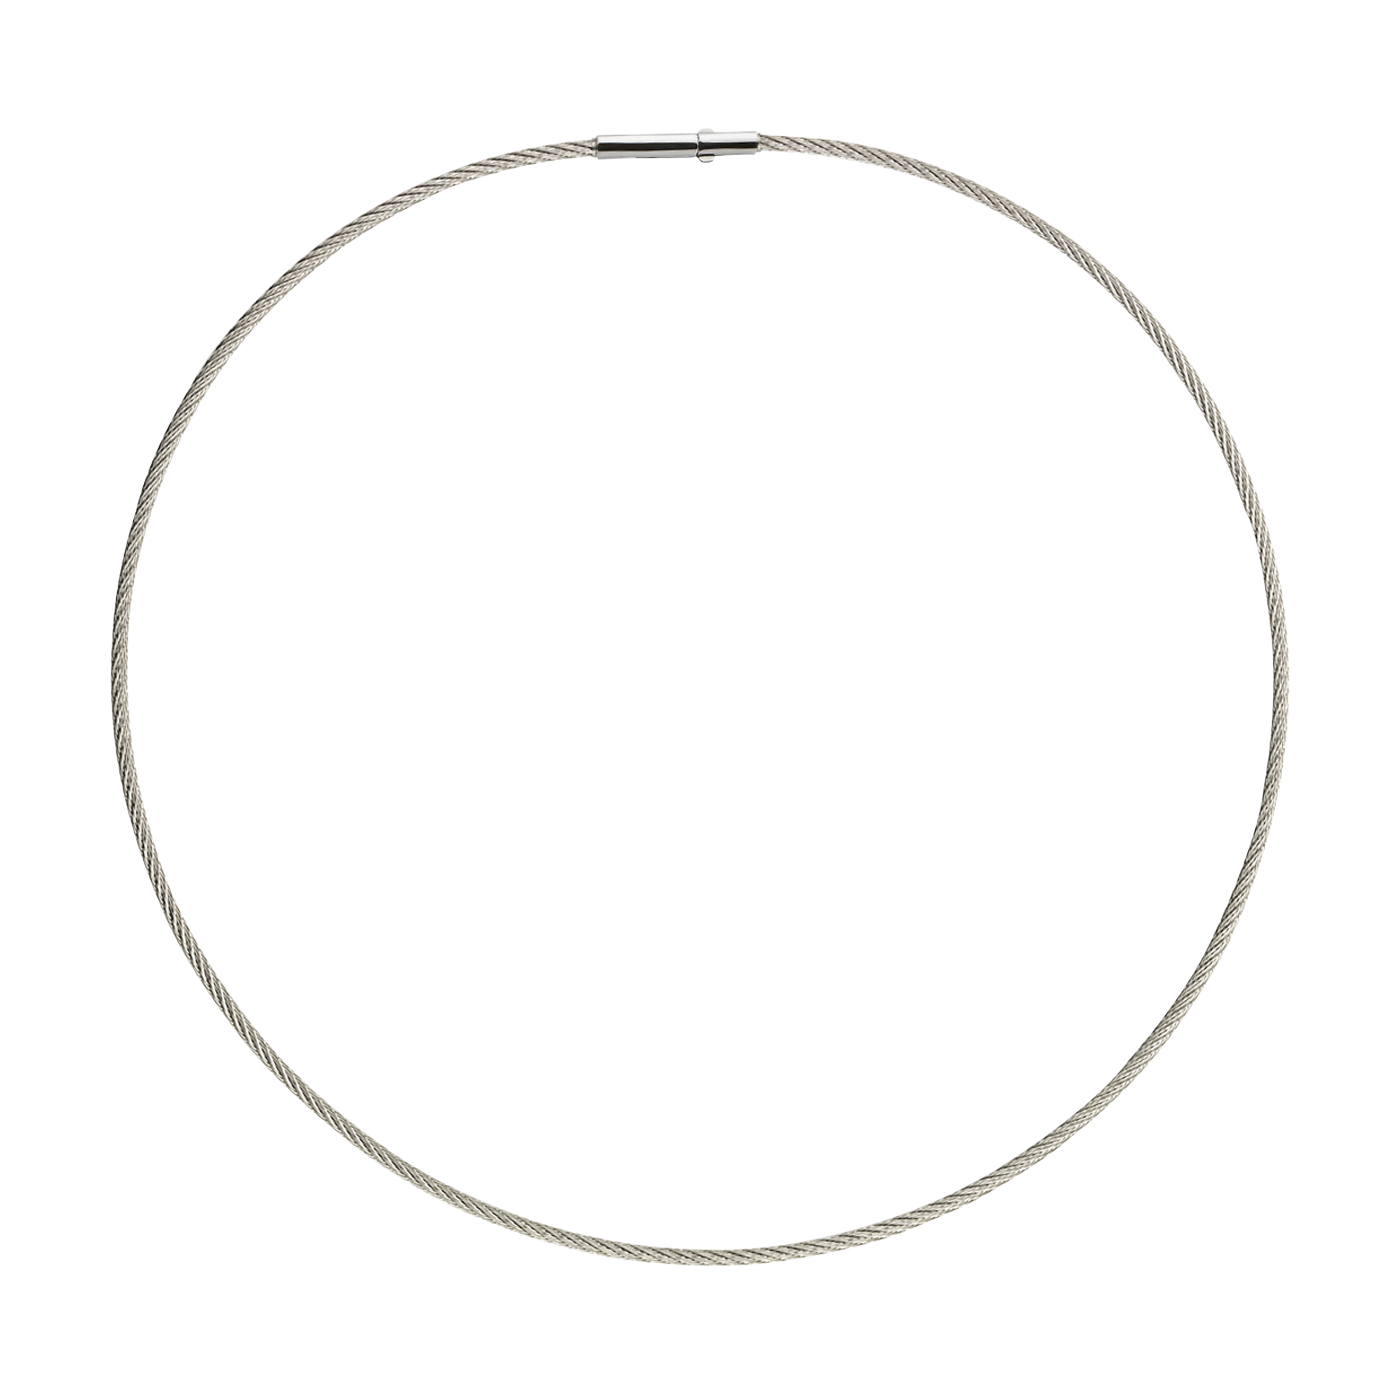 Rope Necklace, 1 Row, Double Clip Closure, ø 0.81 mm,42 cm - 1 piece